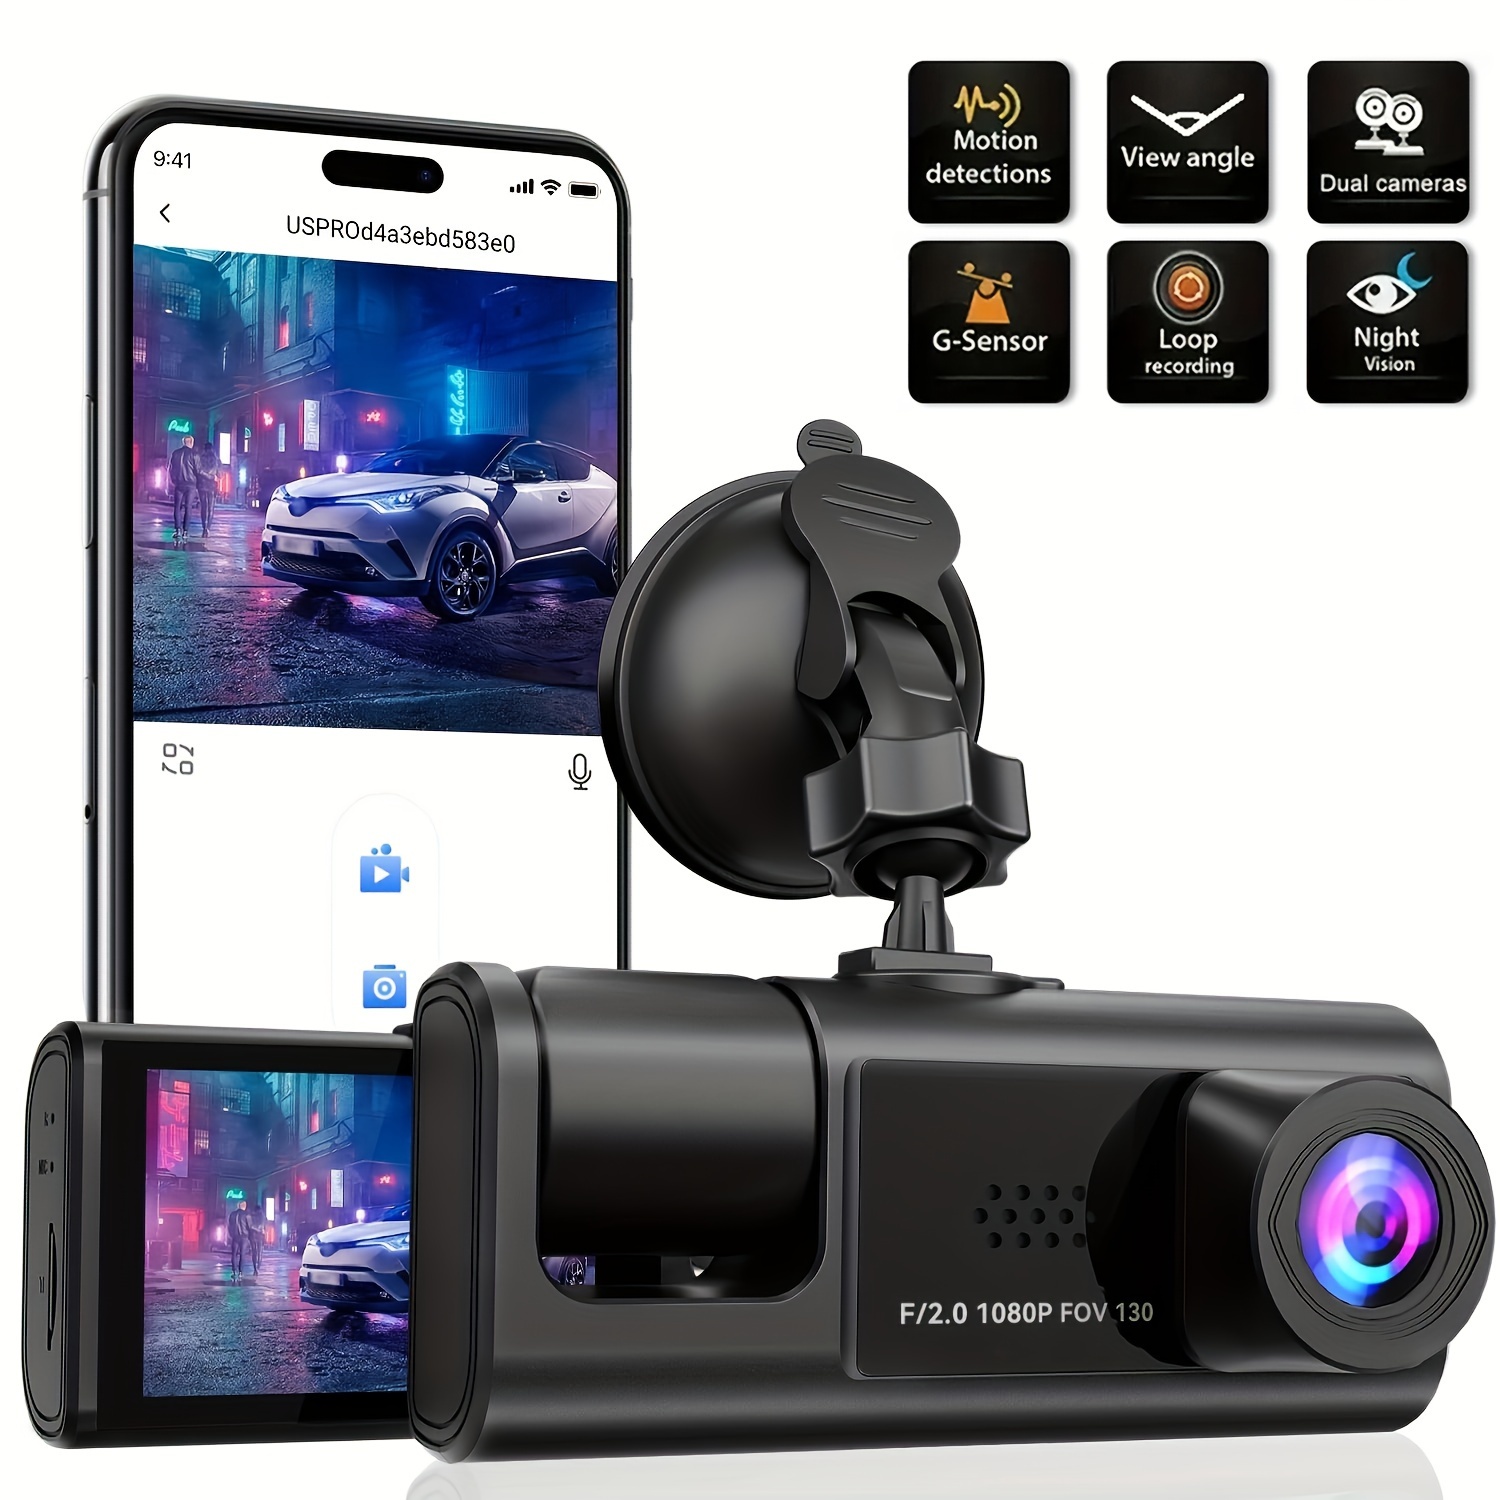 4 Channel Wifi Dash Cam 1080P HD Driving Recorder G-Sensor Car Front+Rear  Camera